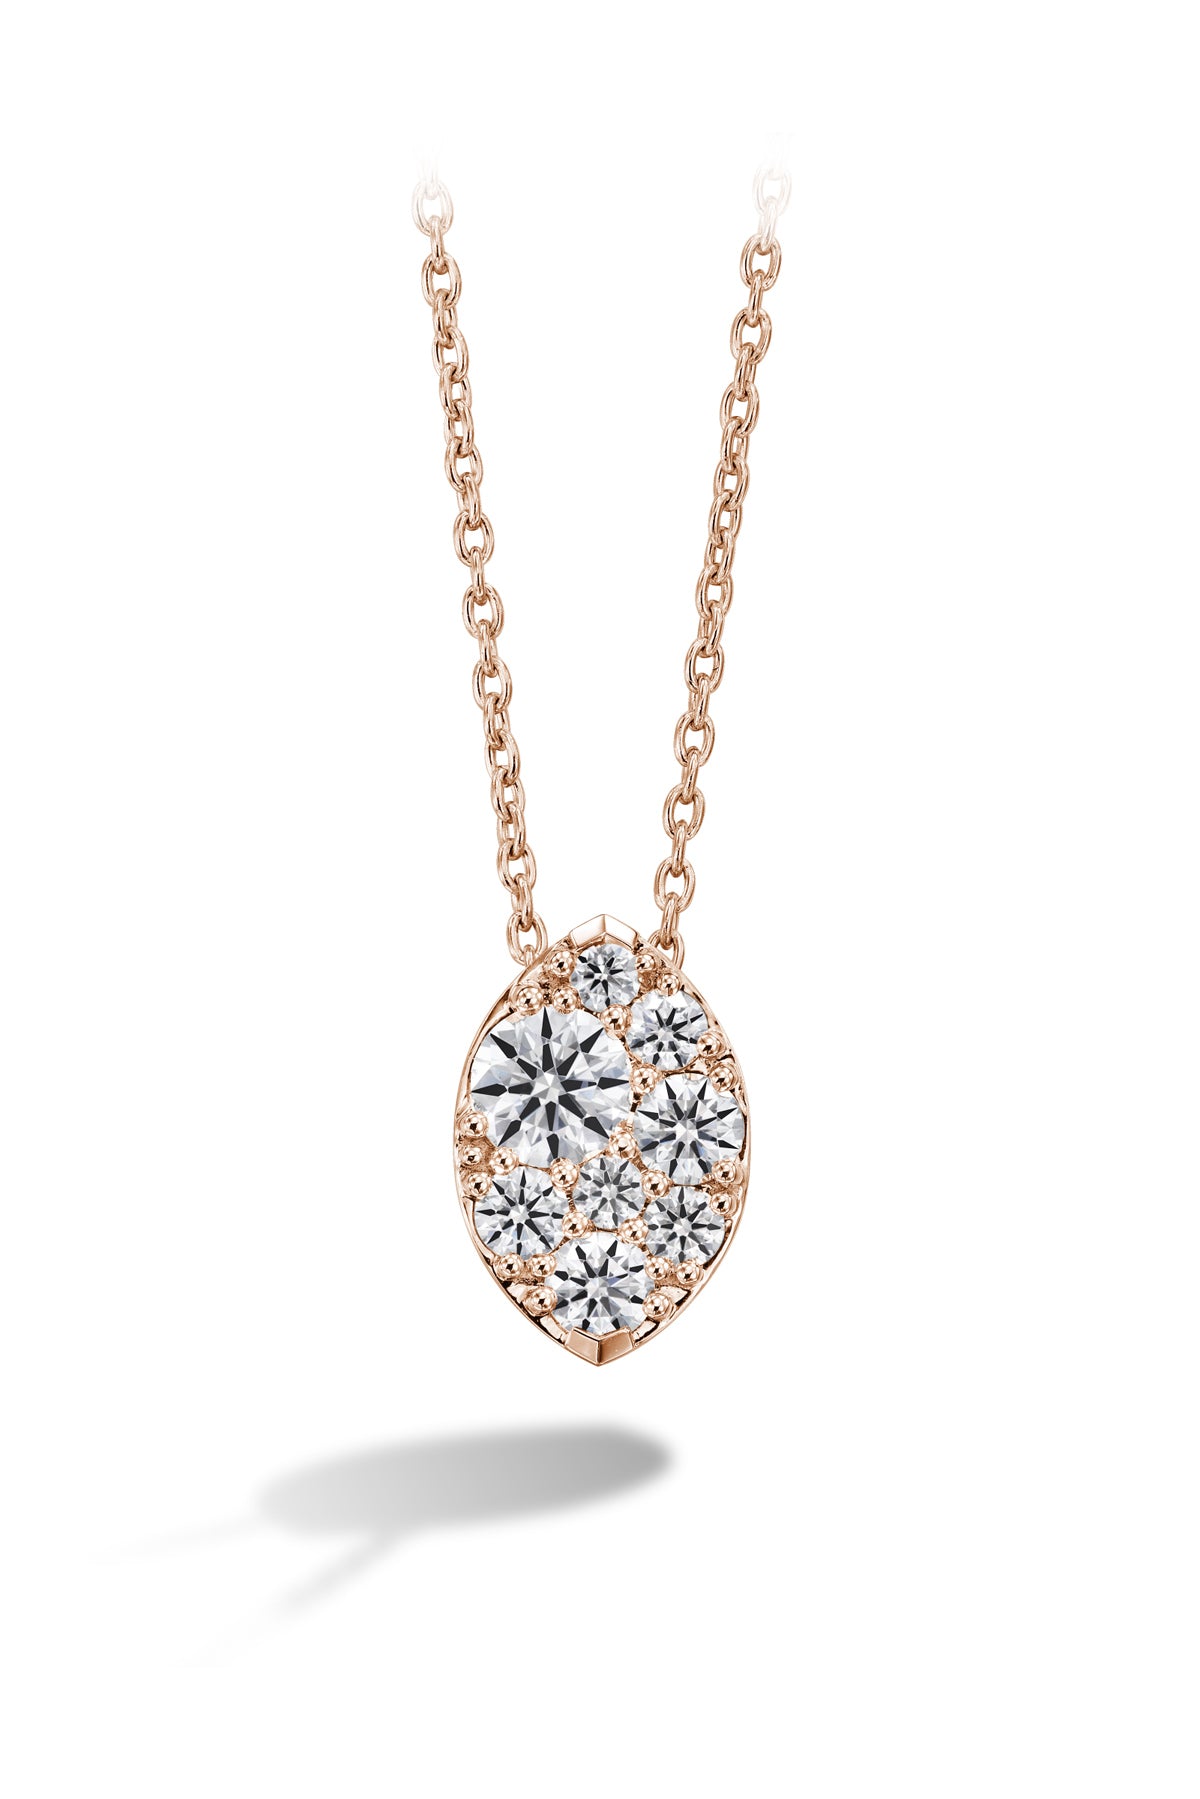 Tessa Diamond Navette Pendant From Hearts On Fire available at LeGassick Diamonds and Jewellery Gold Coast, Australia.